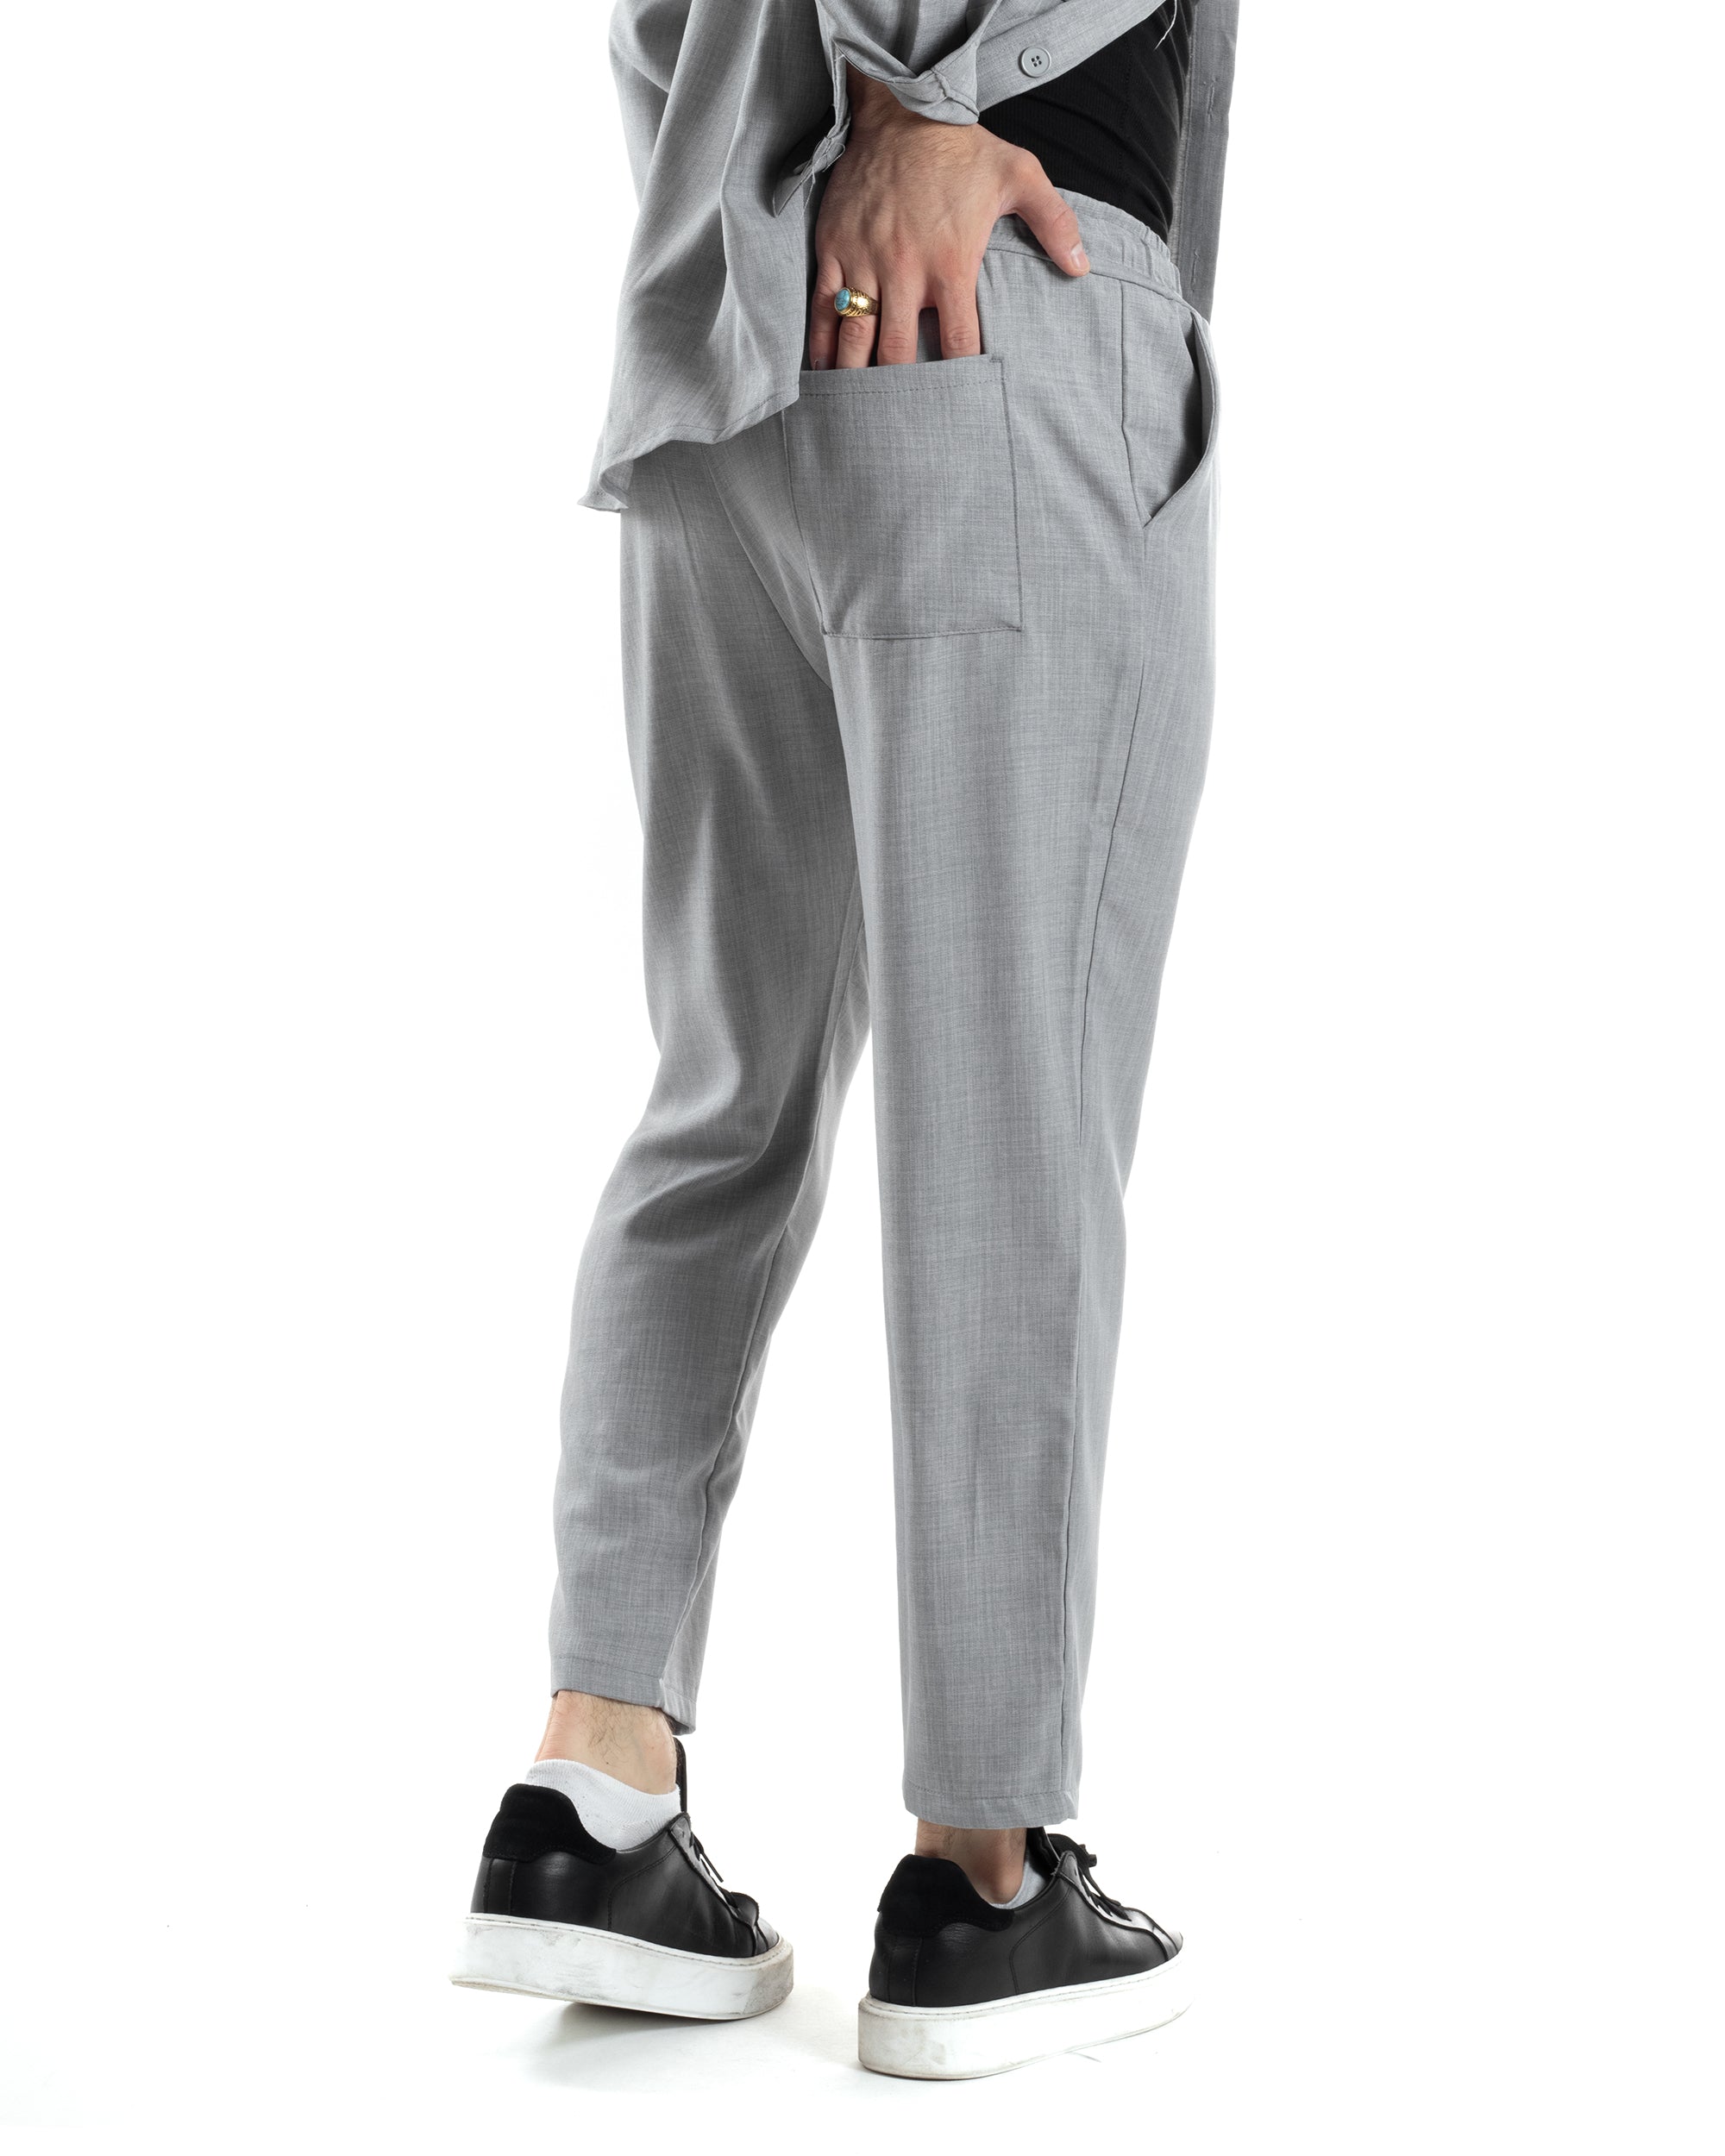 Completo Set Coordinato Uomo Viscosa Camicia Pantaloni Jogger Outfit Melangiato Grigio GIOSAL-OU2454A